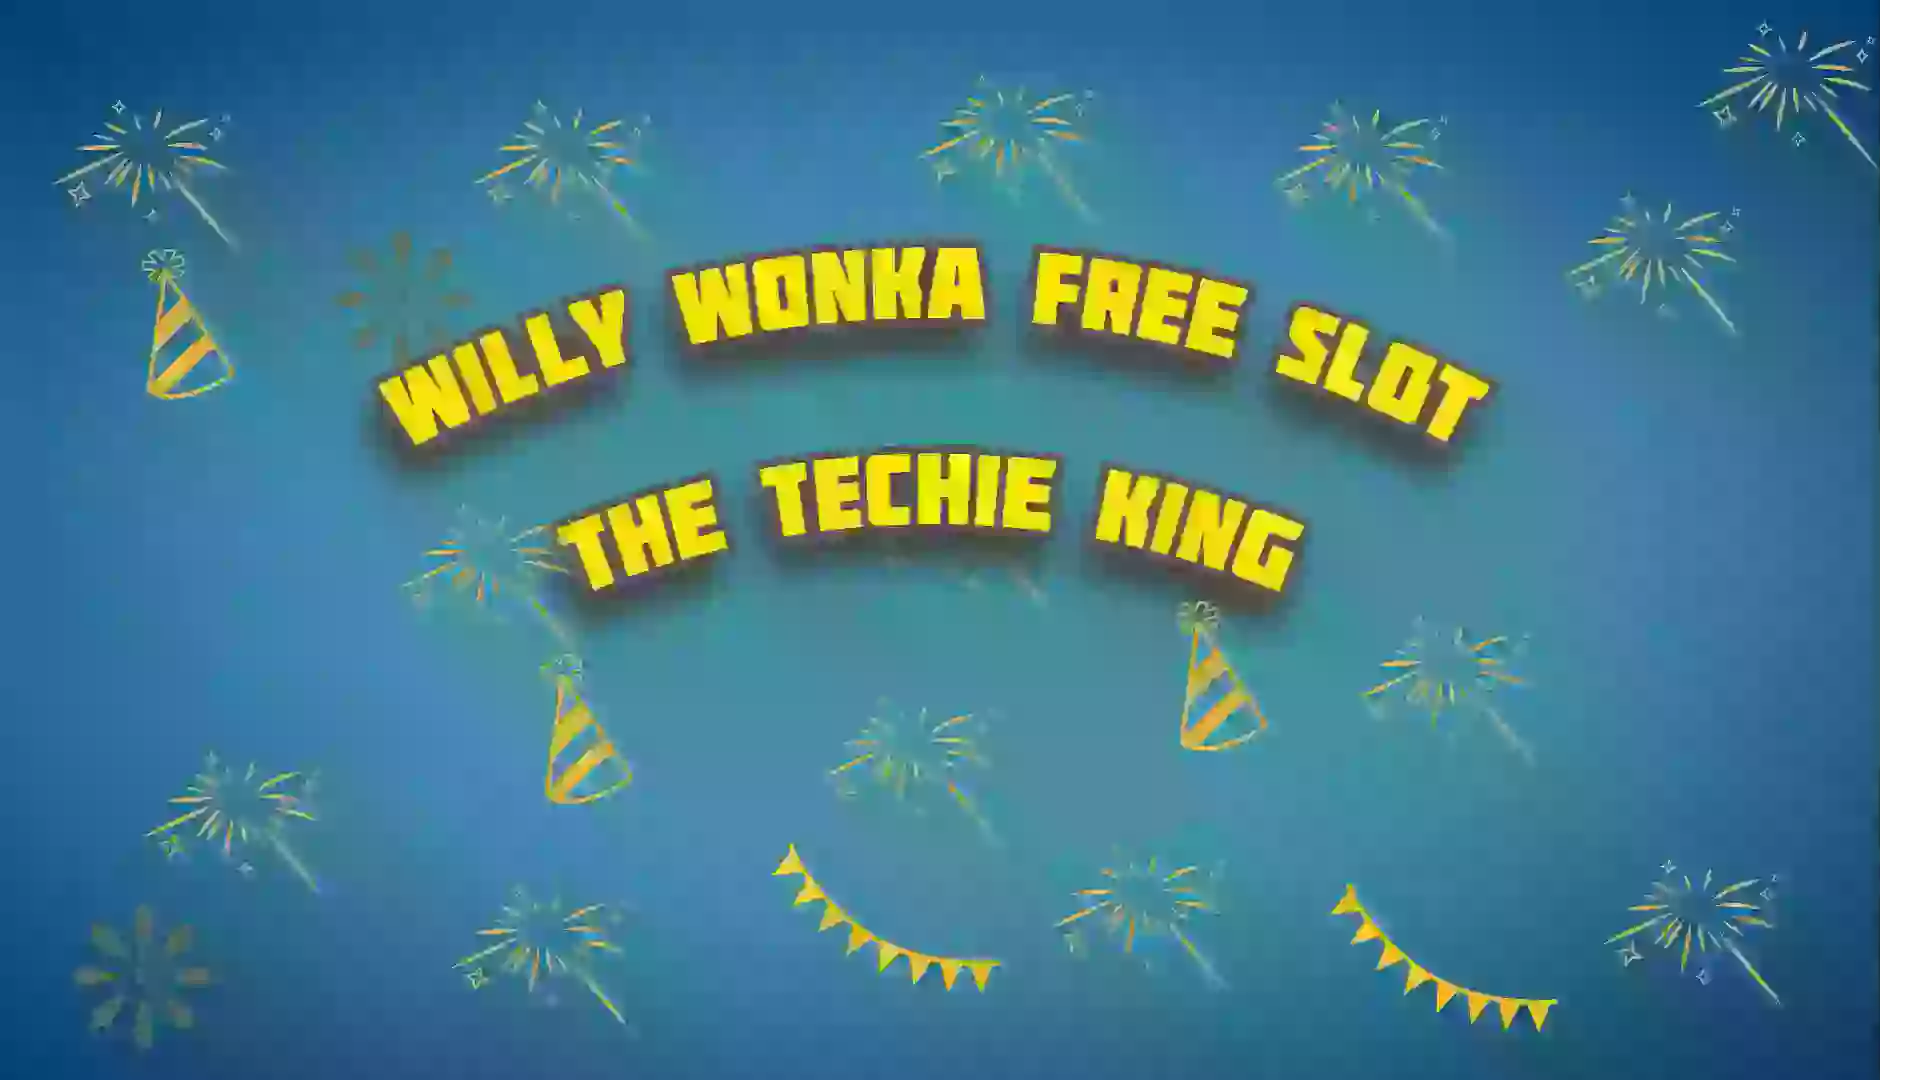 Willy wonka free slots